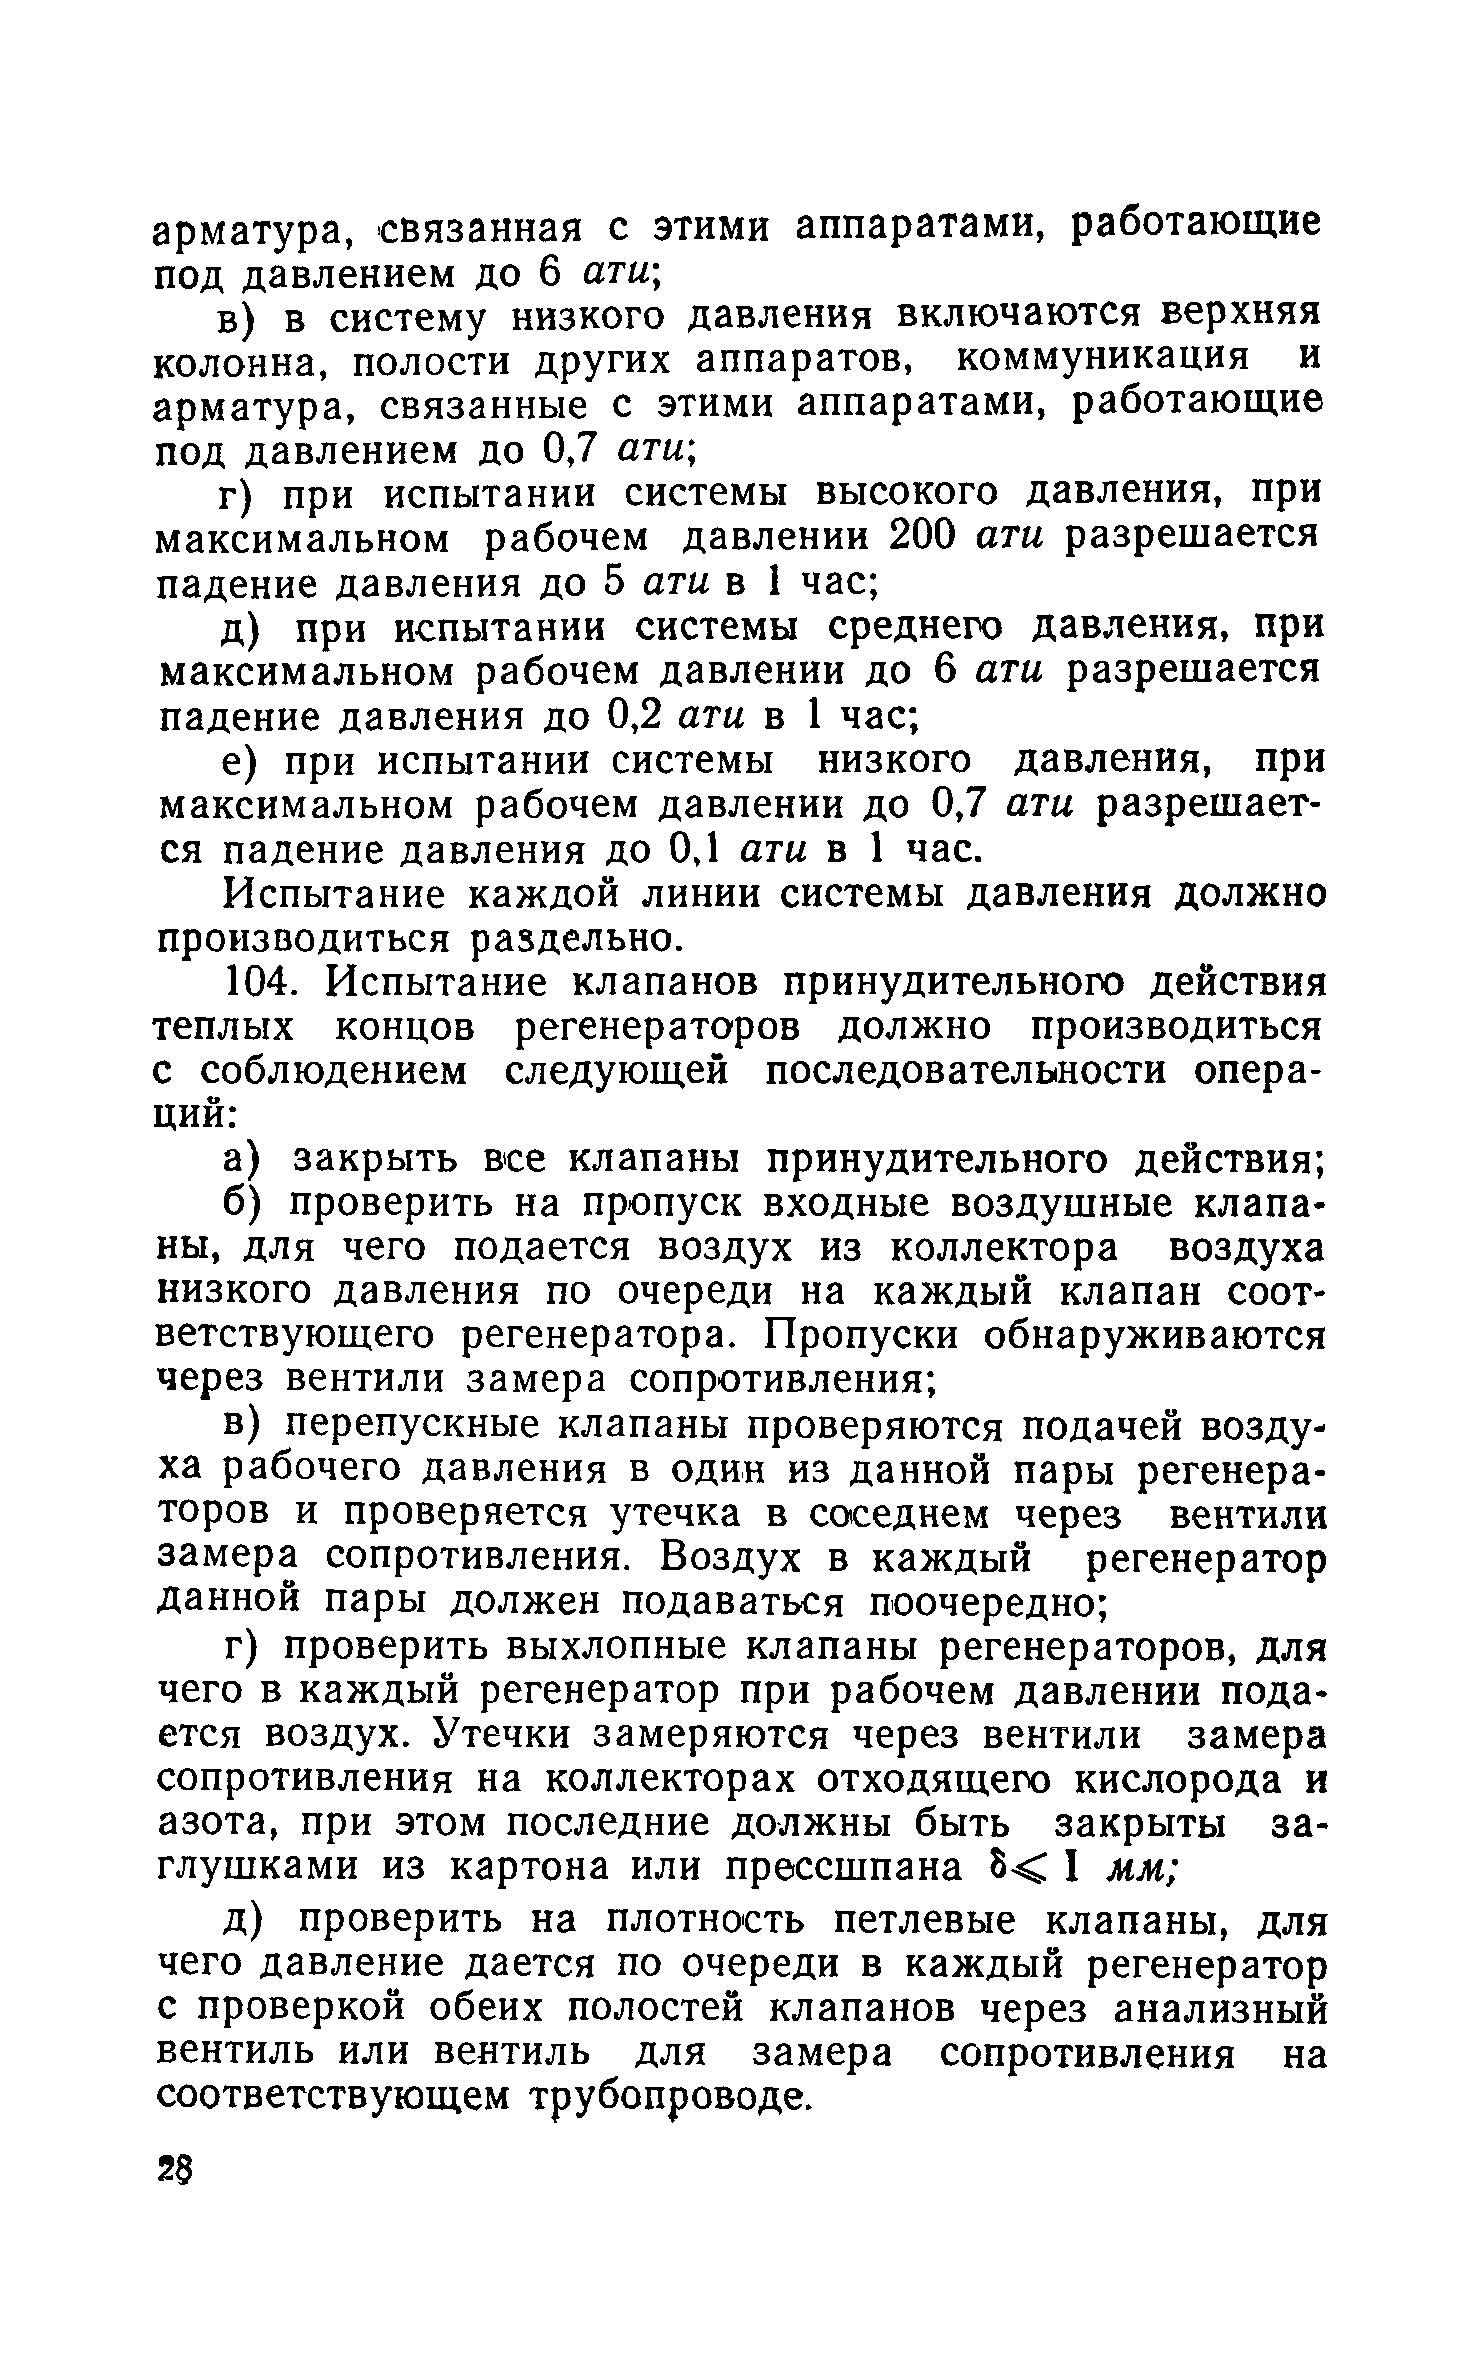 РСН 8-61/Госстрой РСФСР